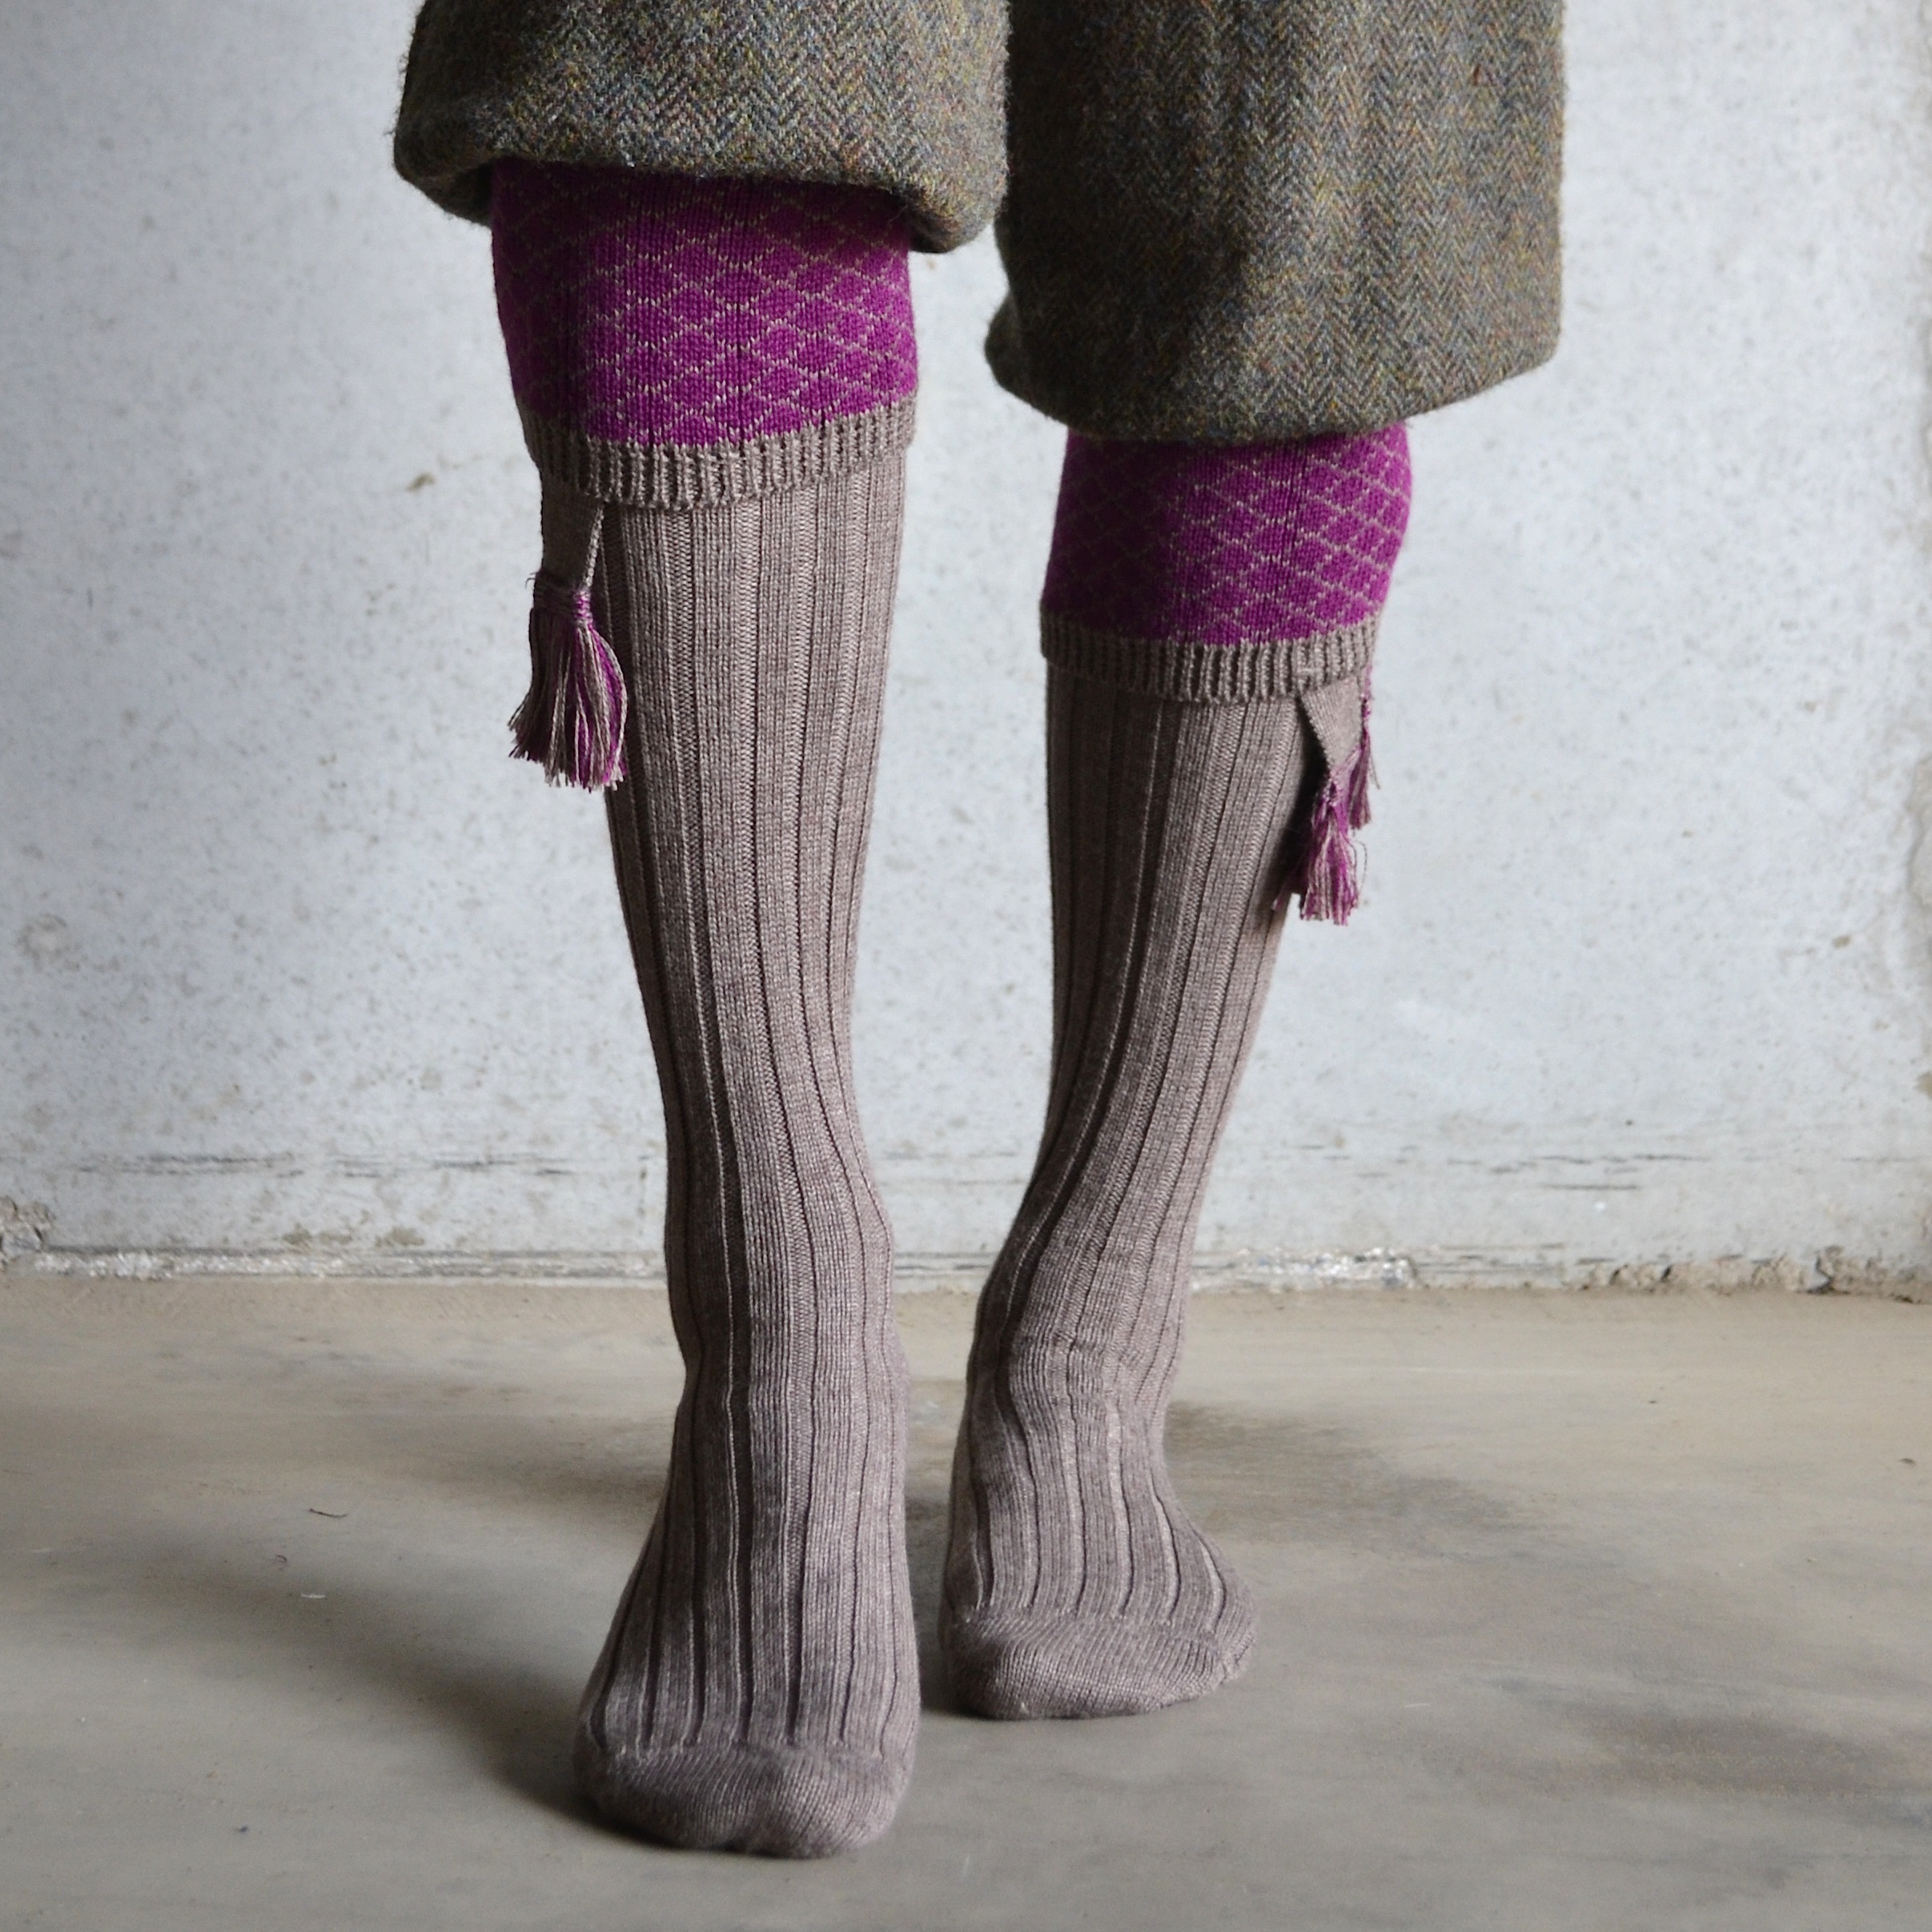 Shooting socks made from merino wool